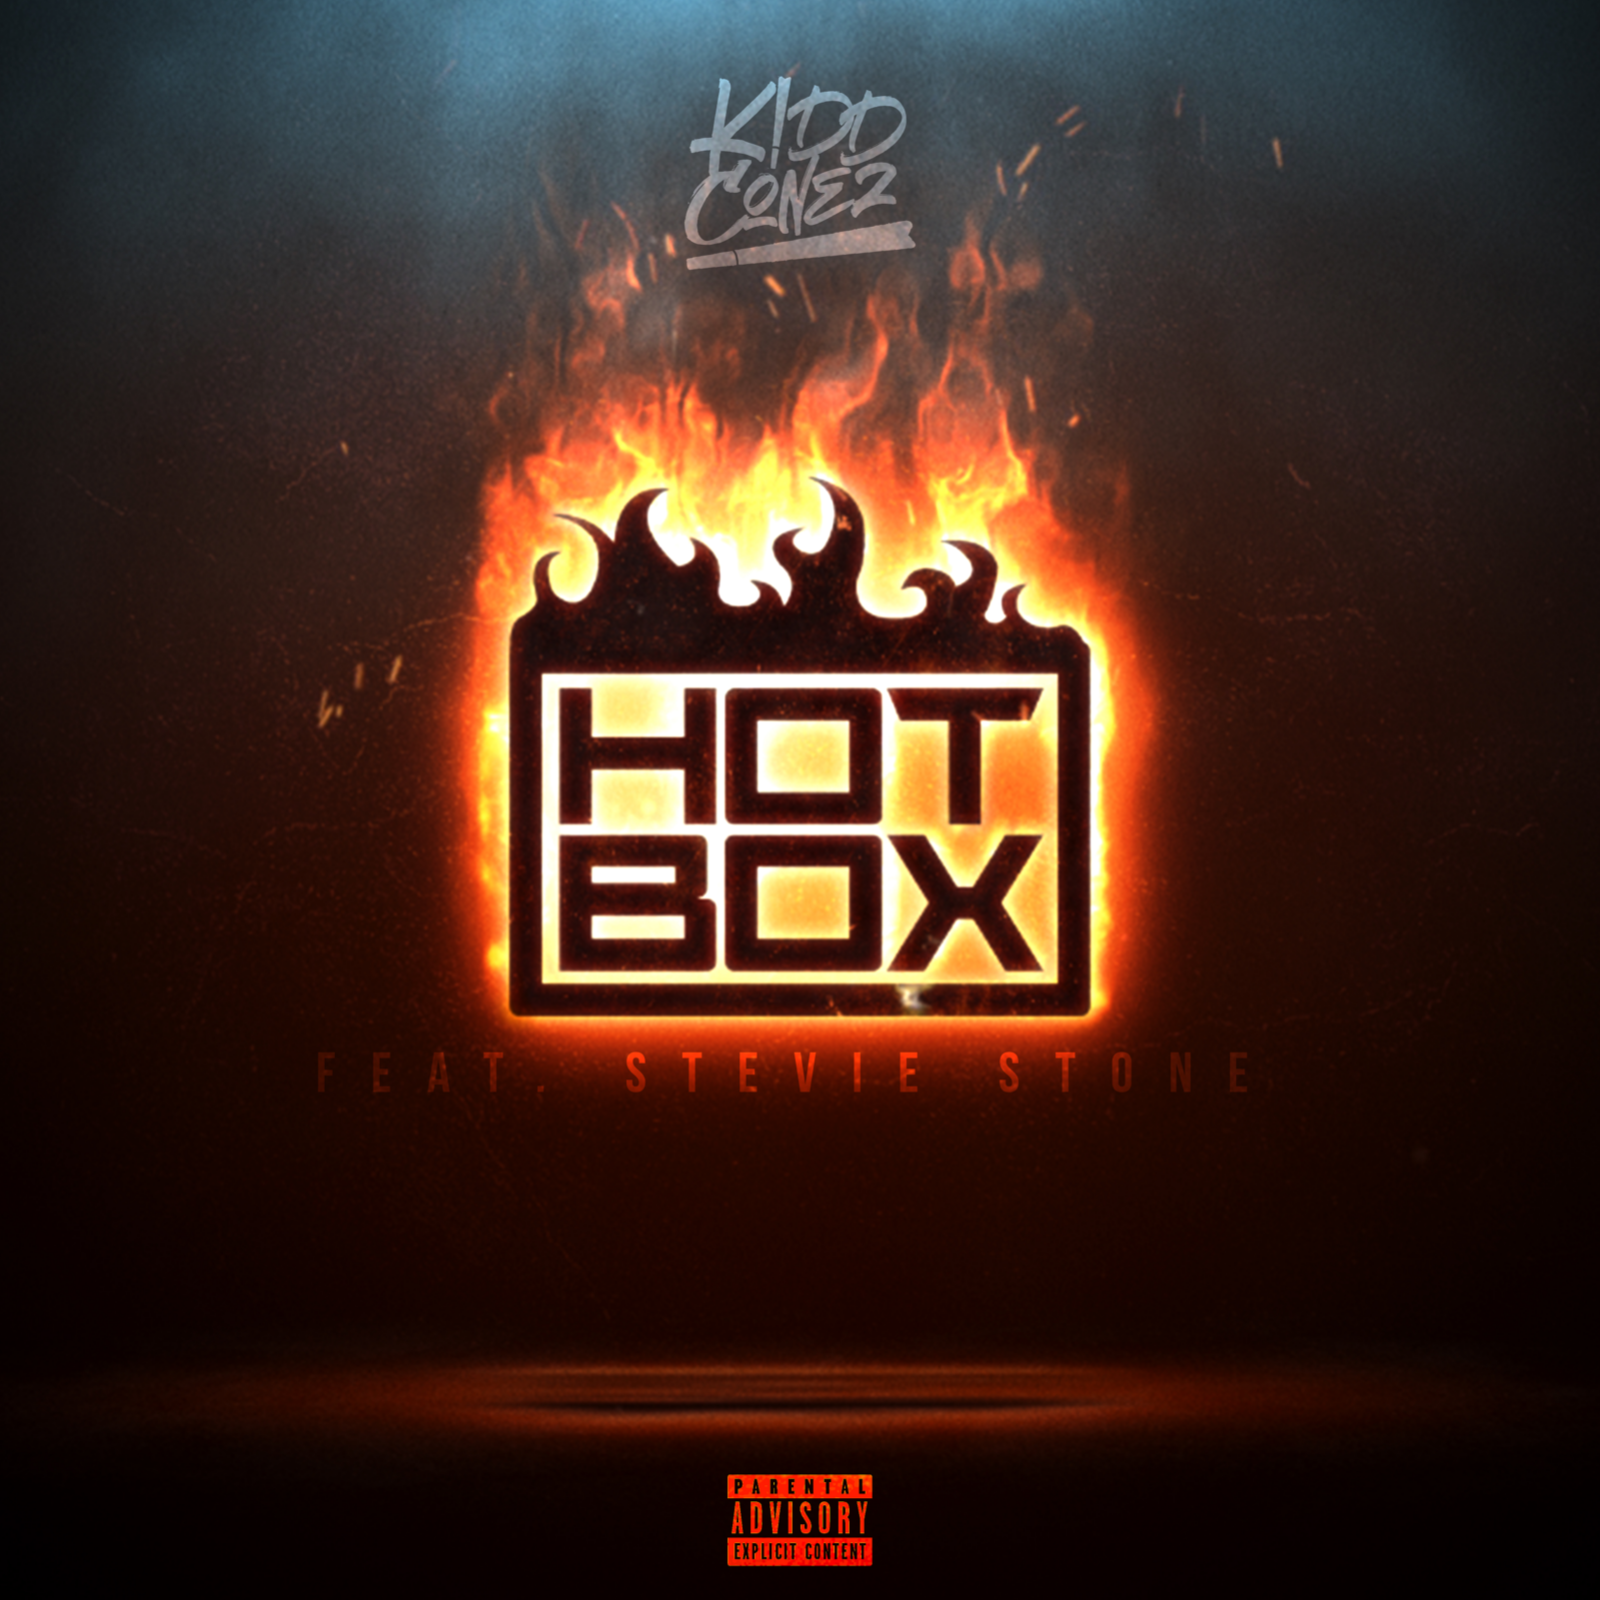 Hot Box - Kidd Conez feat. Stevie Stone